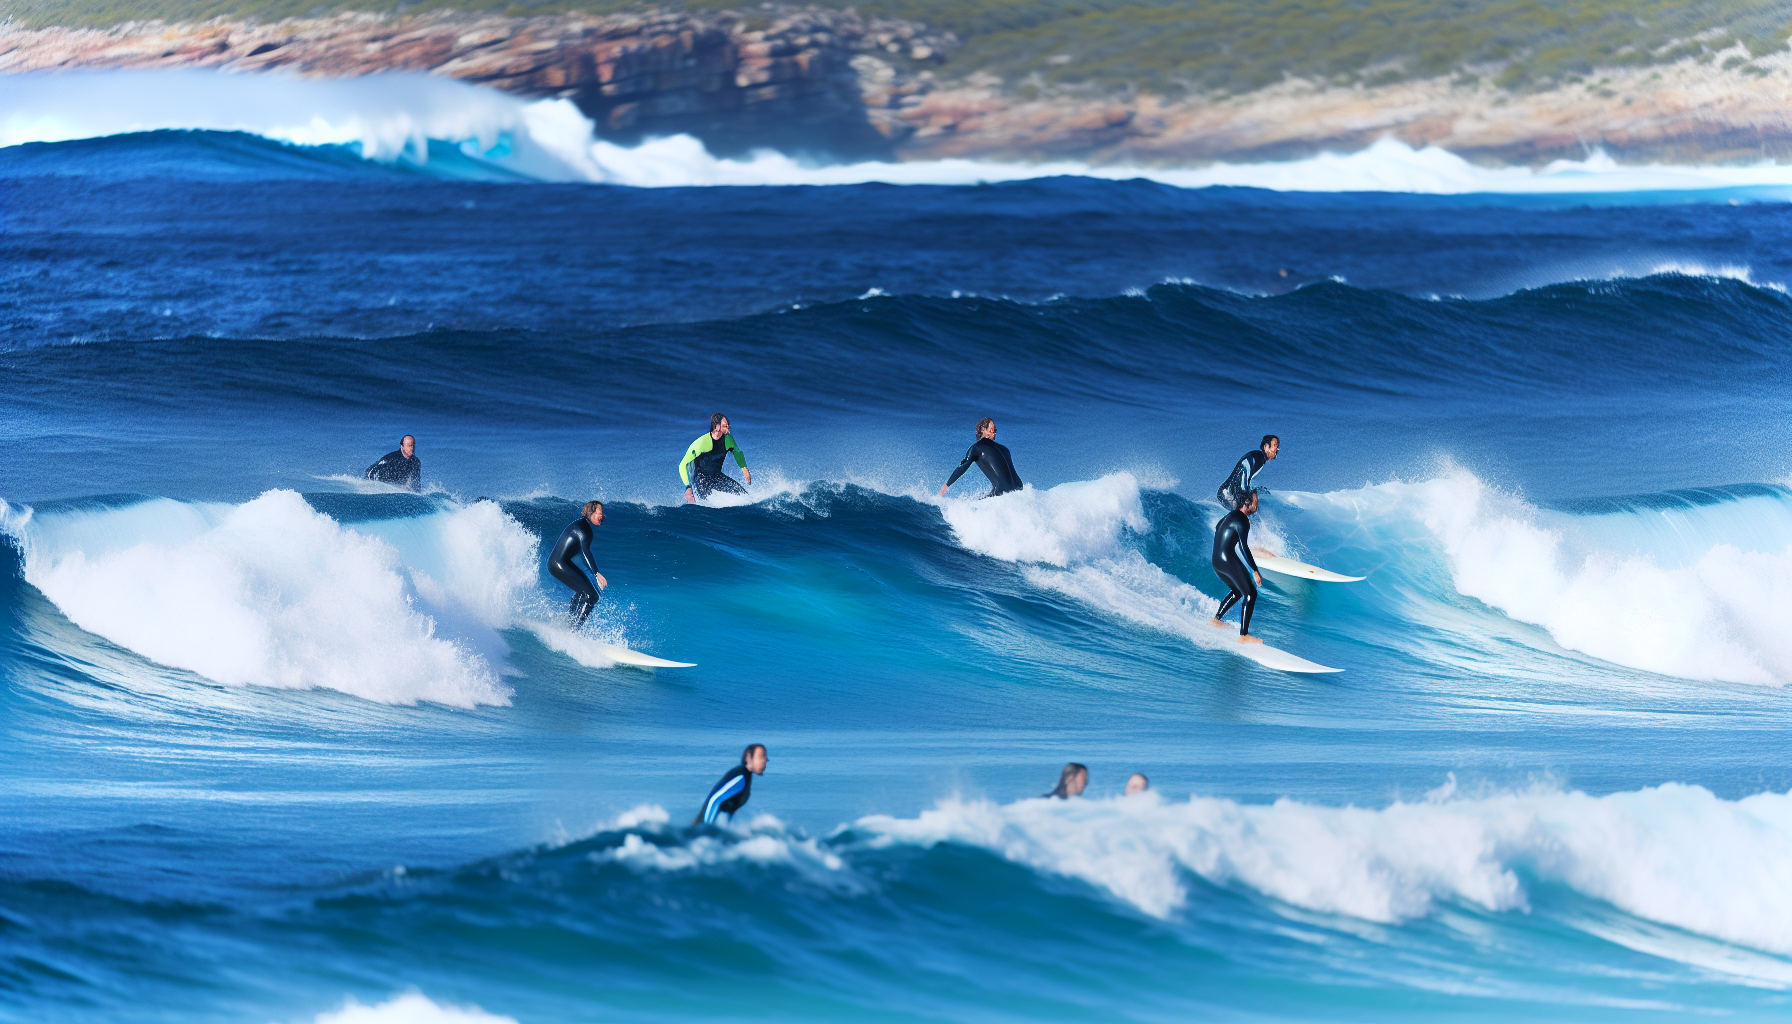 Surfers riding the waves at Pennington Bay, Kangaroo Island